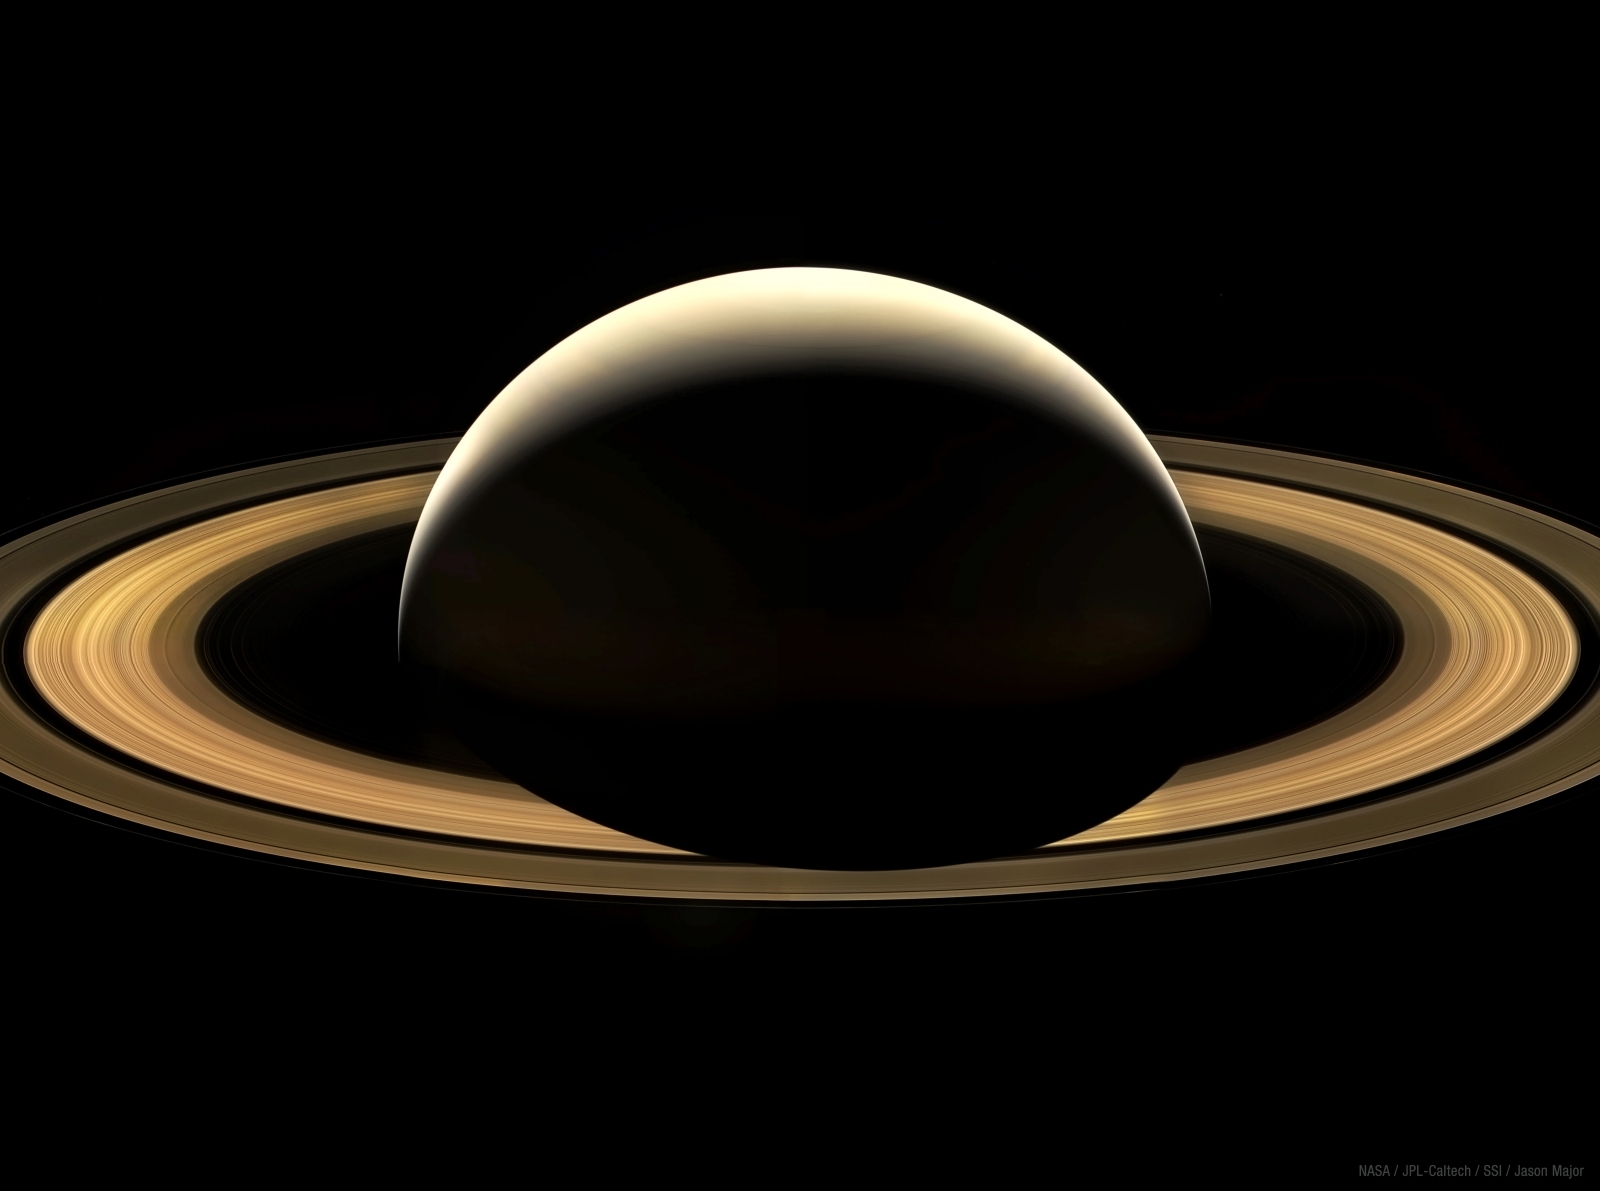 Cassinis Final Mosaic of Saturn